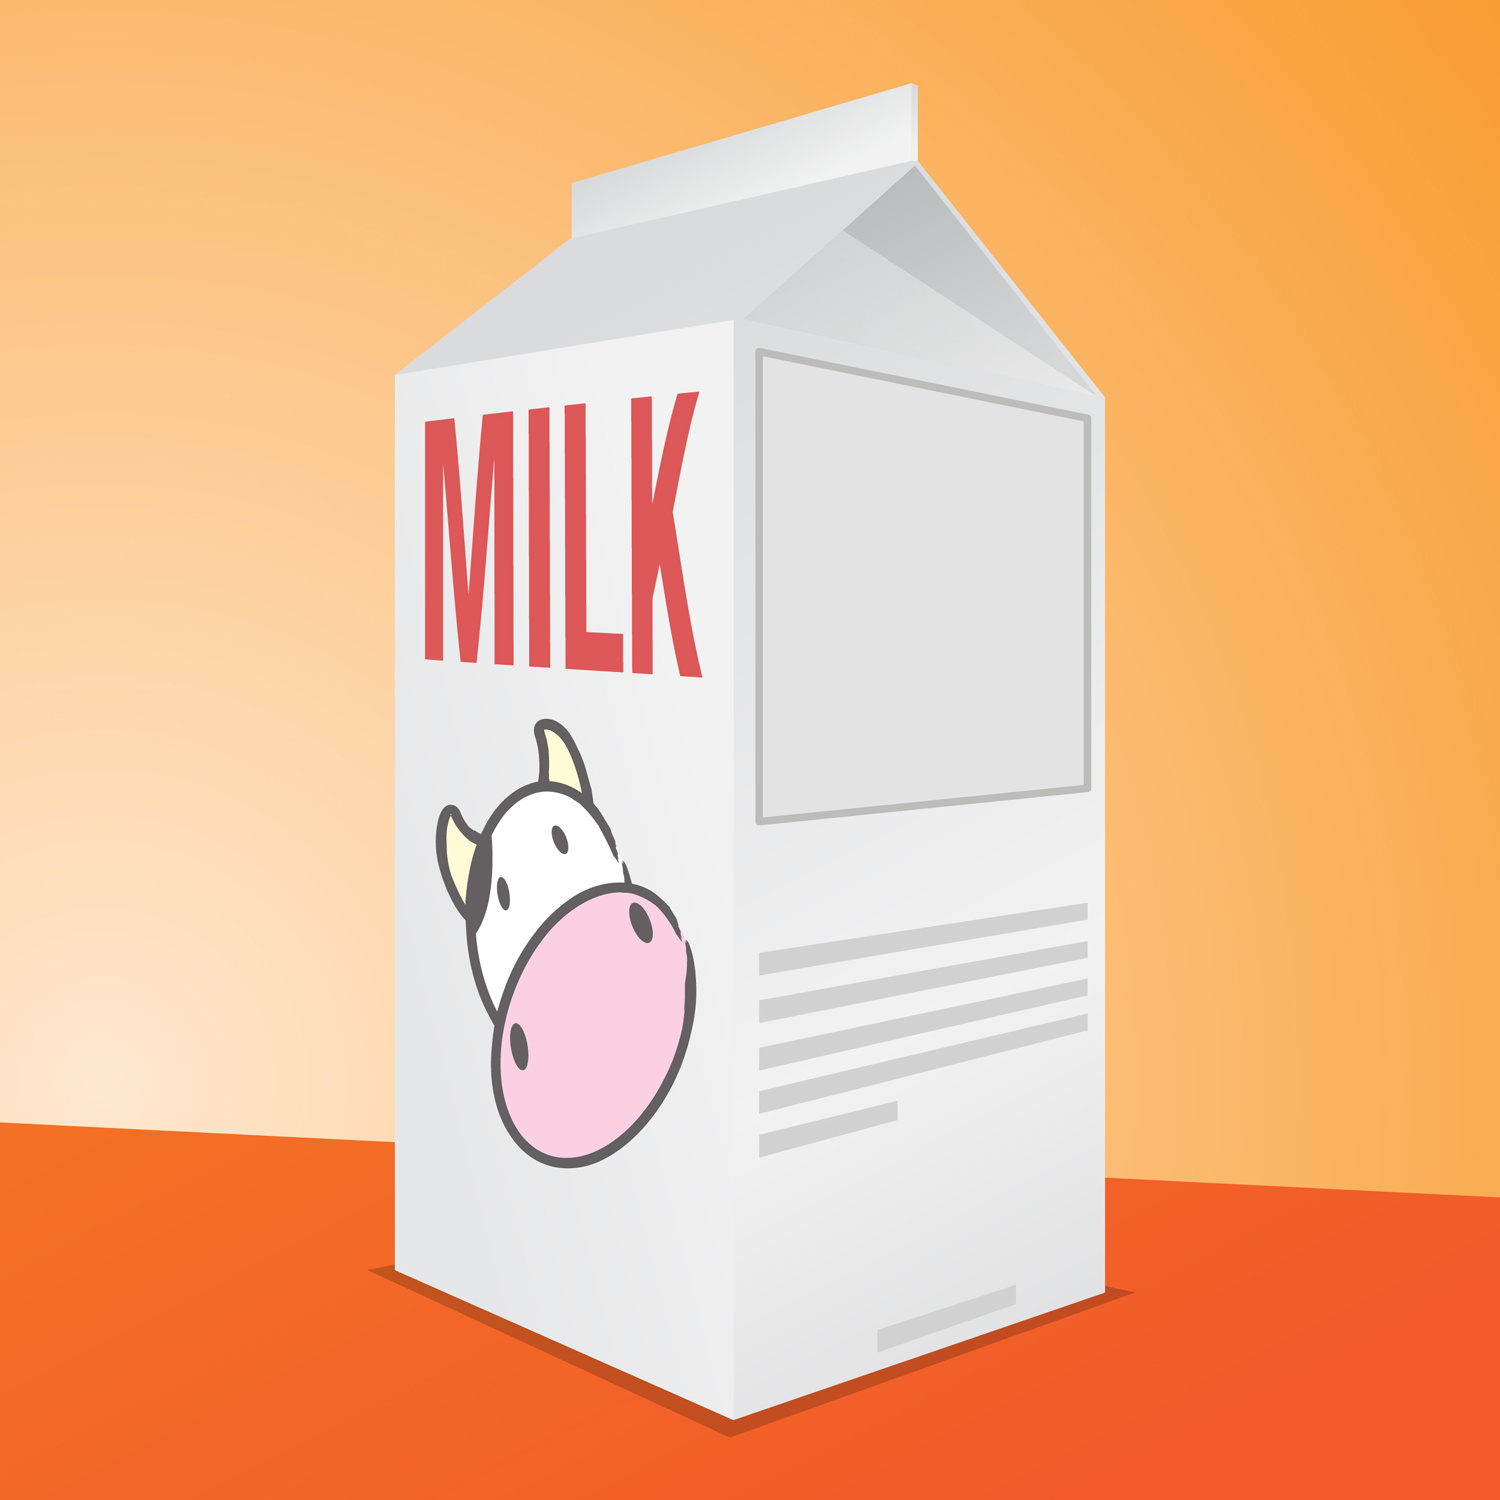 Milk Carton — Vector illustration of a white milk carton that says MILK